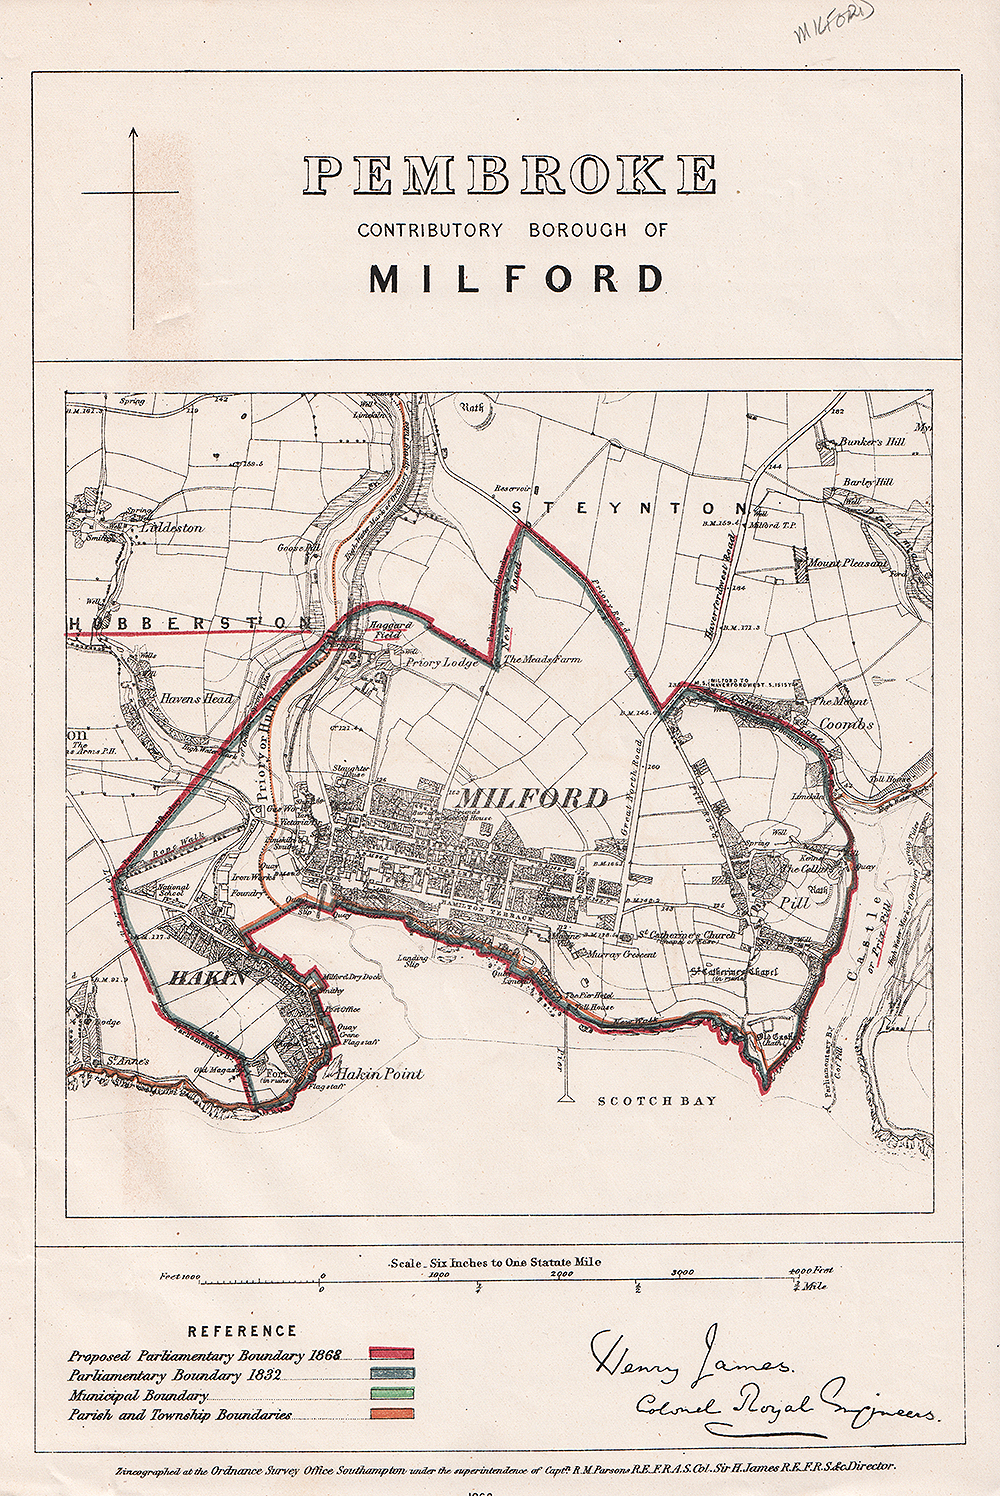 Contributory Borough of Milford